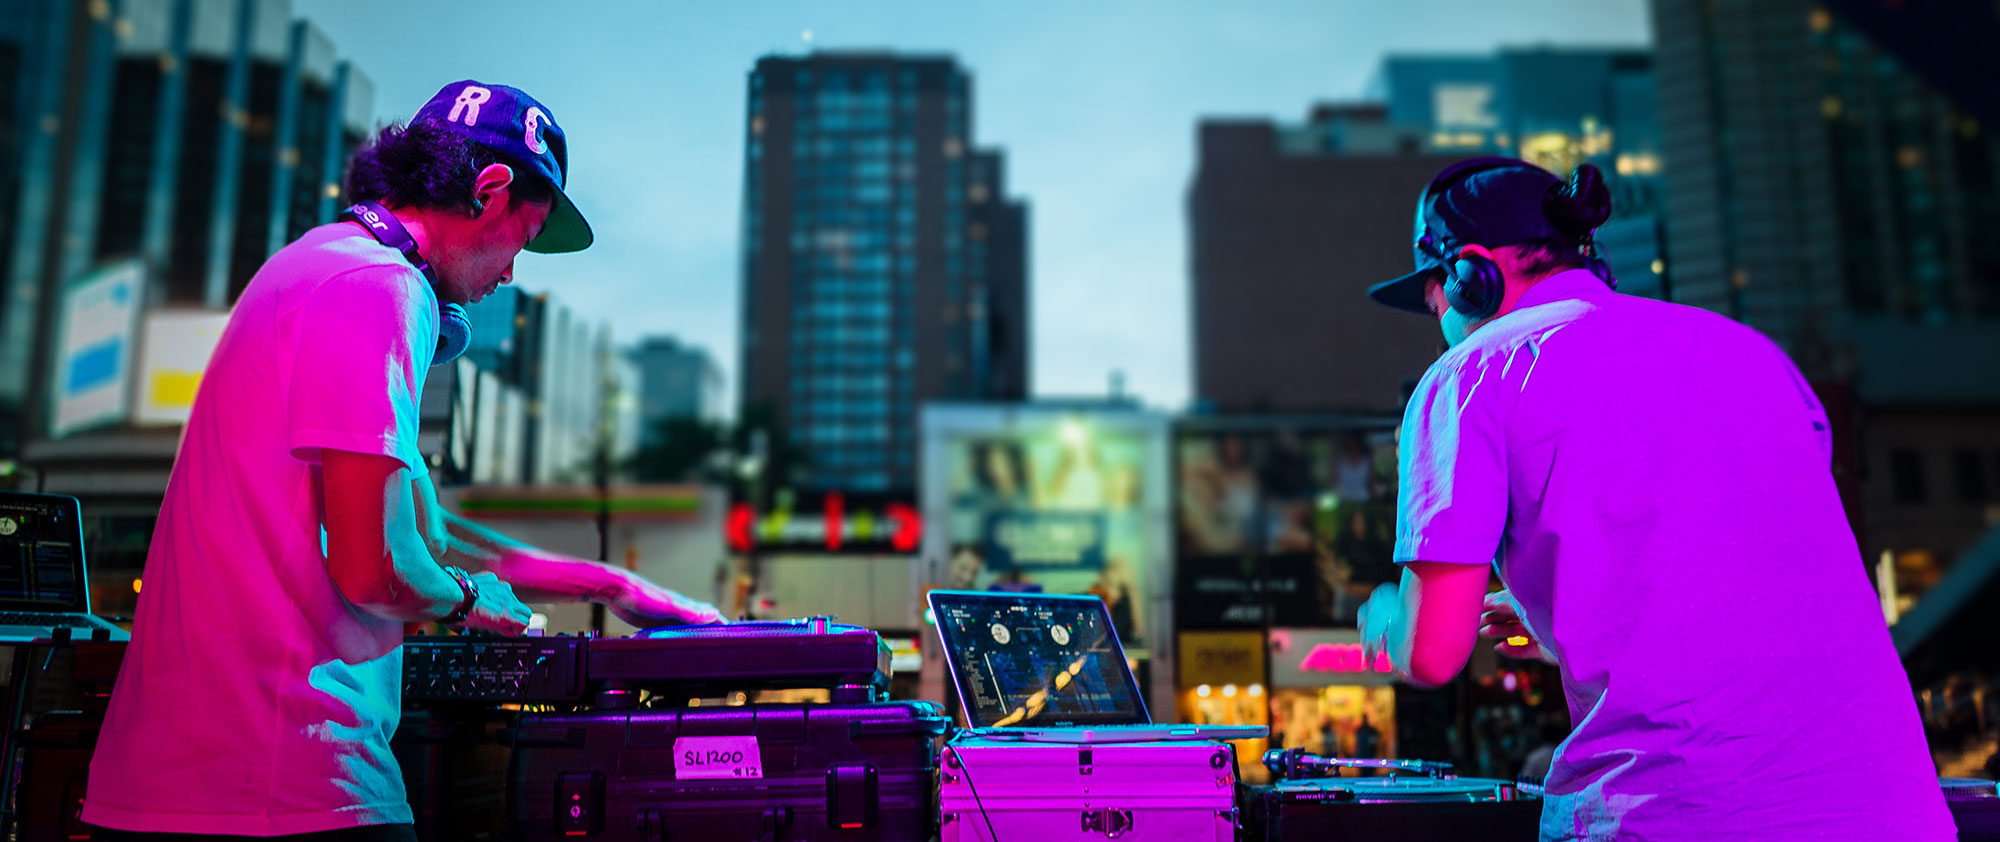 Two men DJ outdoor event in urban environment